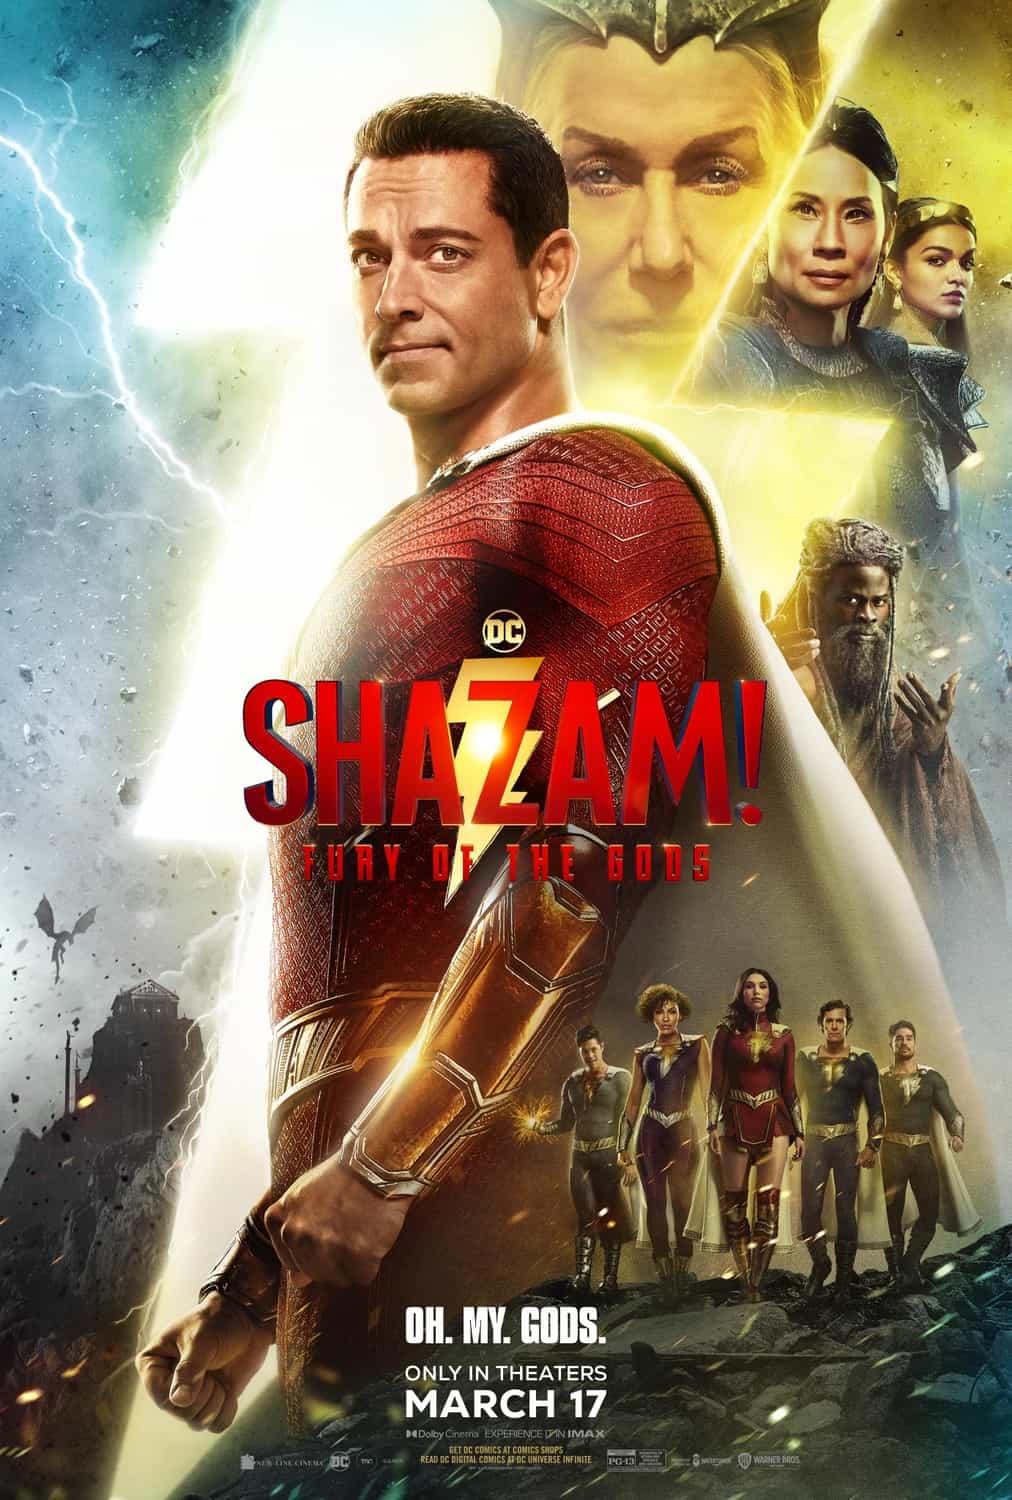 New poster released for Shazam! Fury of the Gods starring Zachary Levi - movie UK release date 17th March 2023 #shazamfuryofthegods